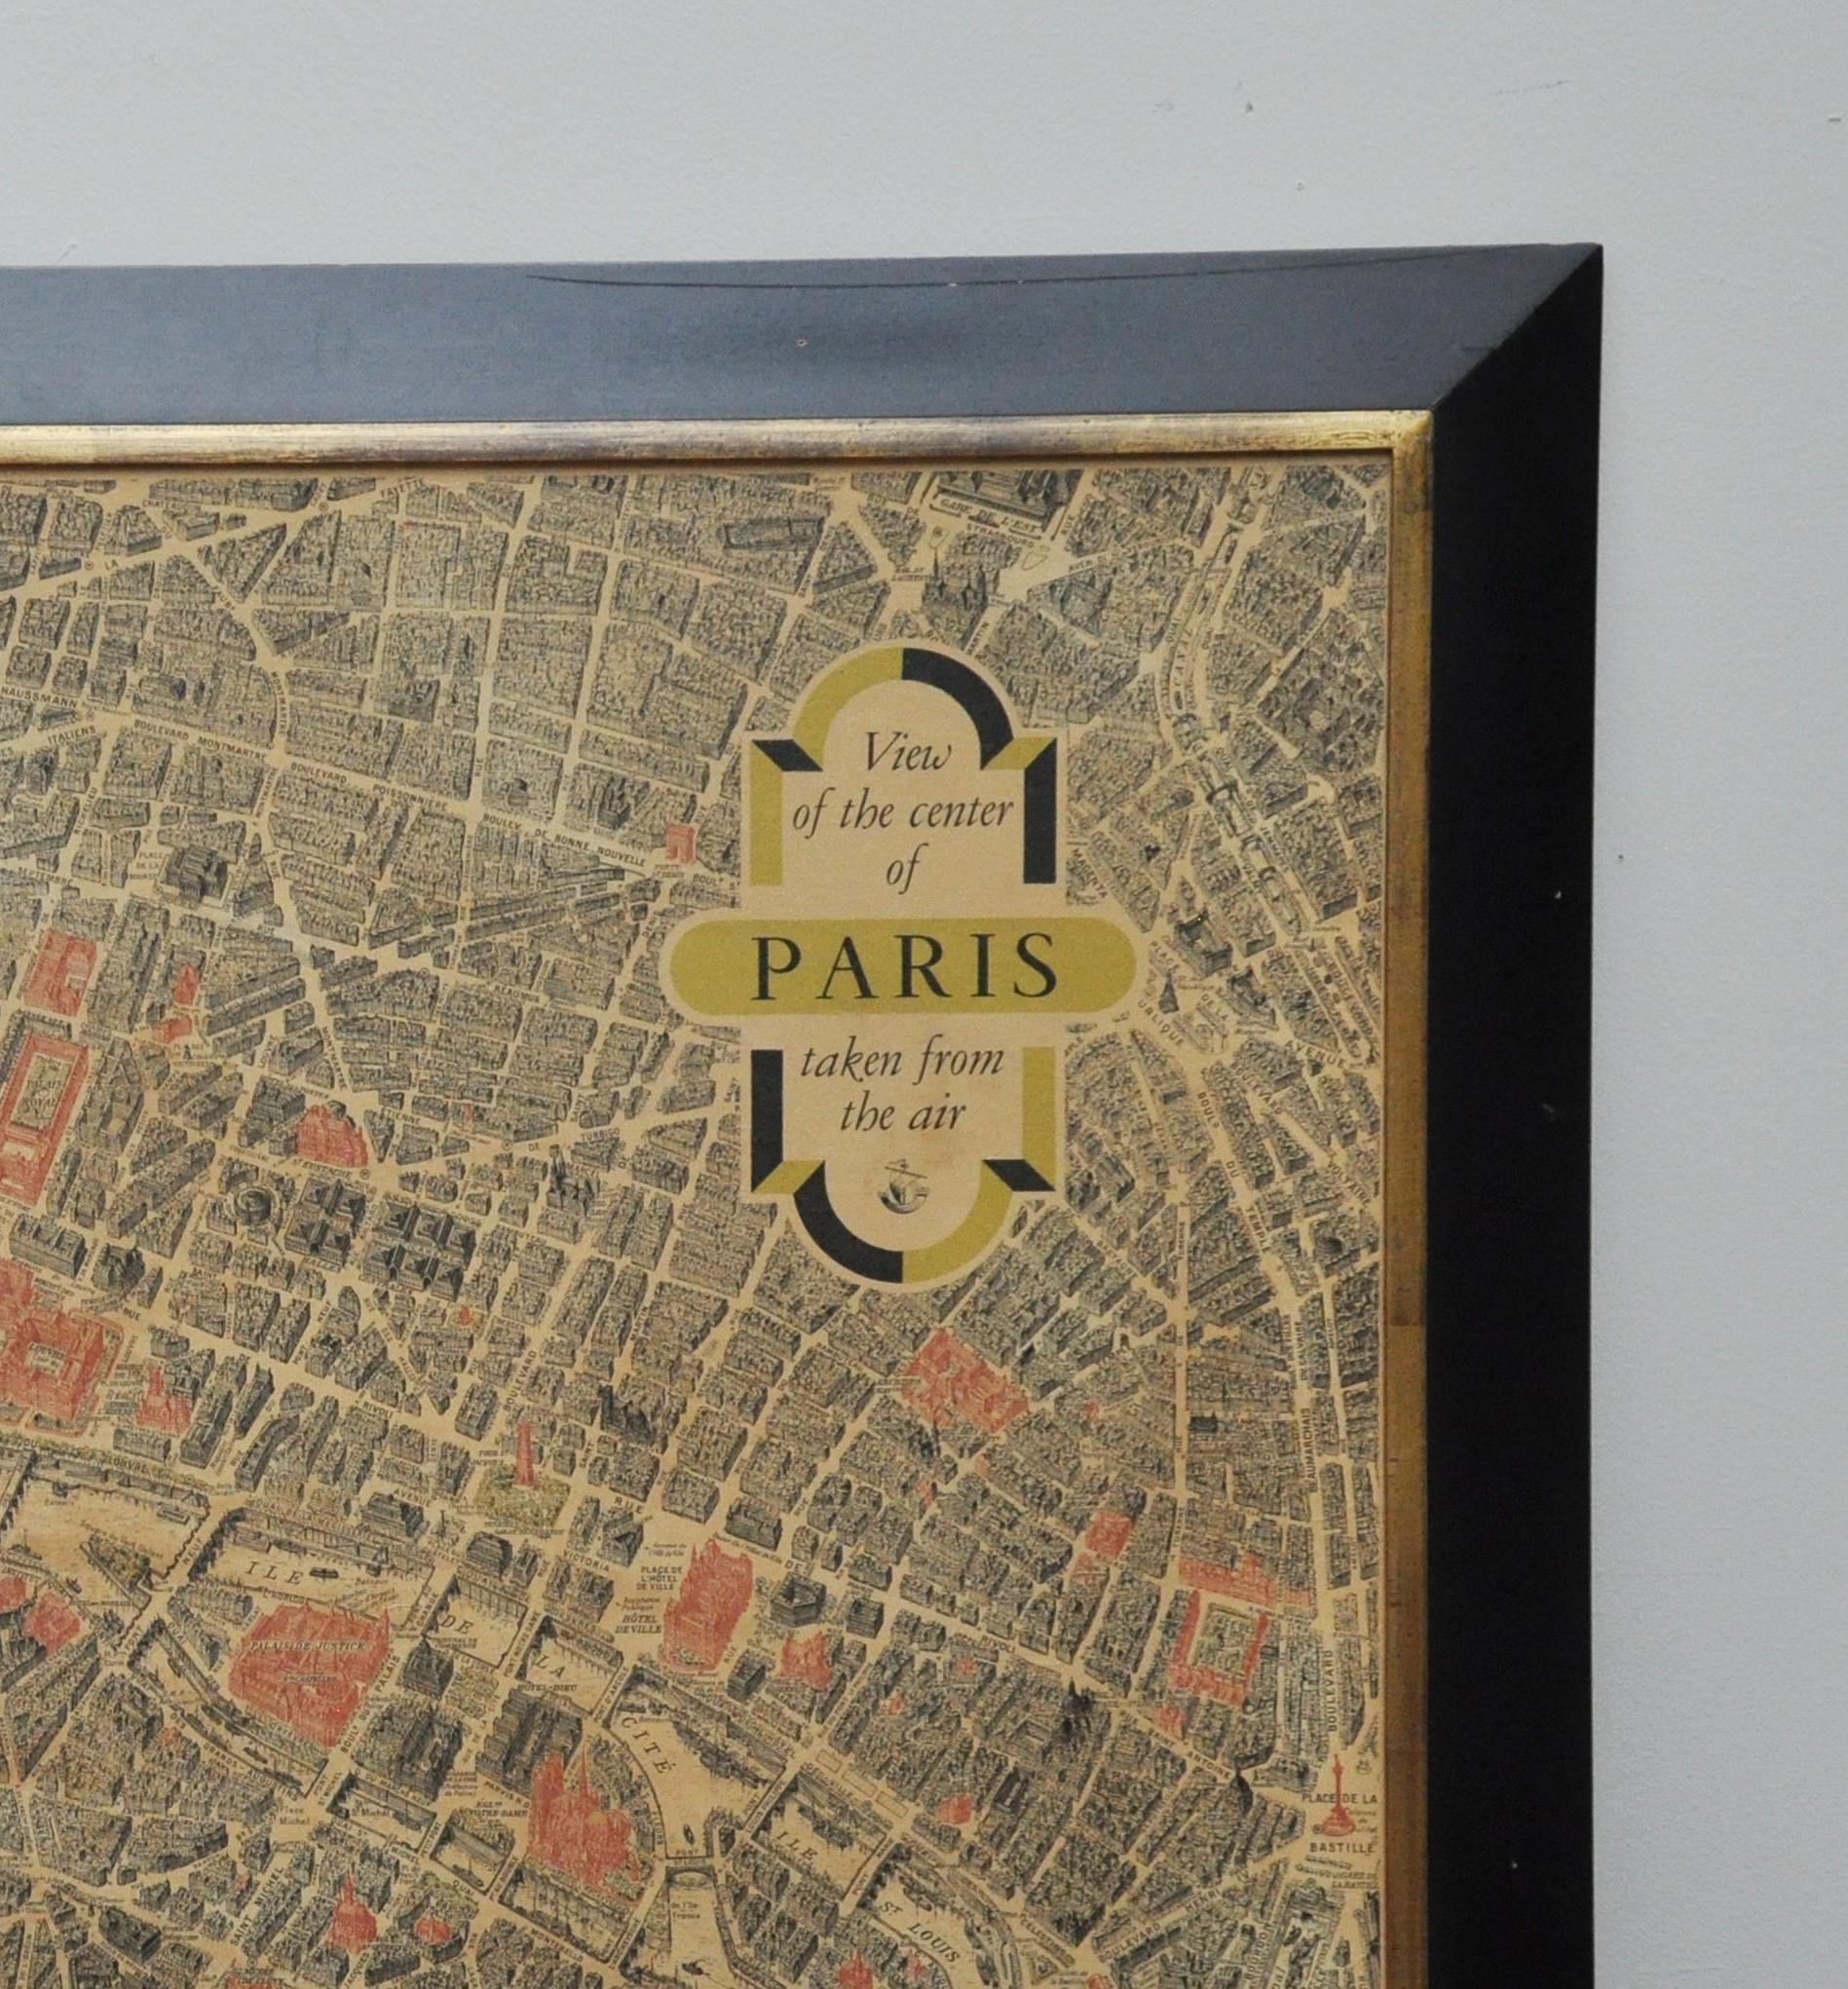 Unique vintage street map of Paris in warm tones. Actual image measures 26.5